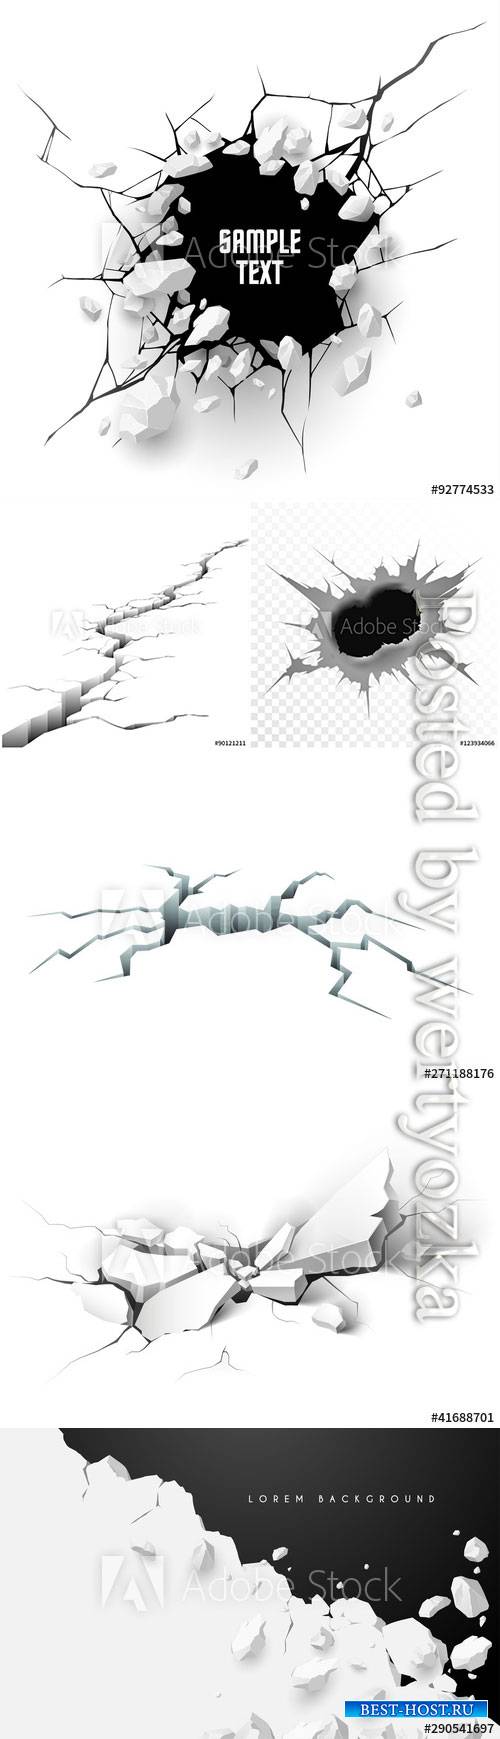 Cracked ground vector illustration isolated on white background